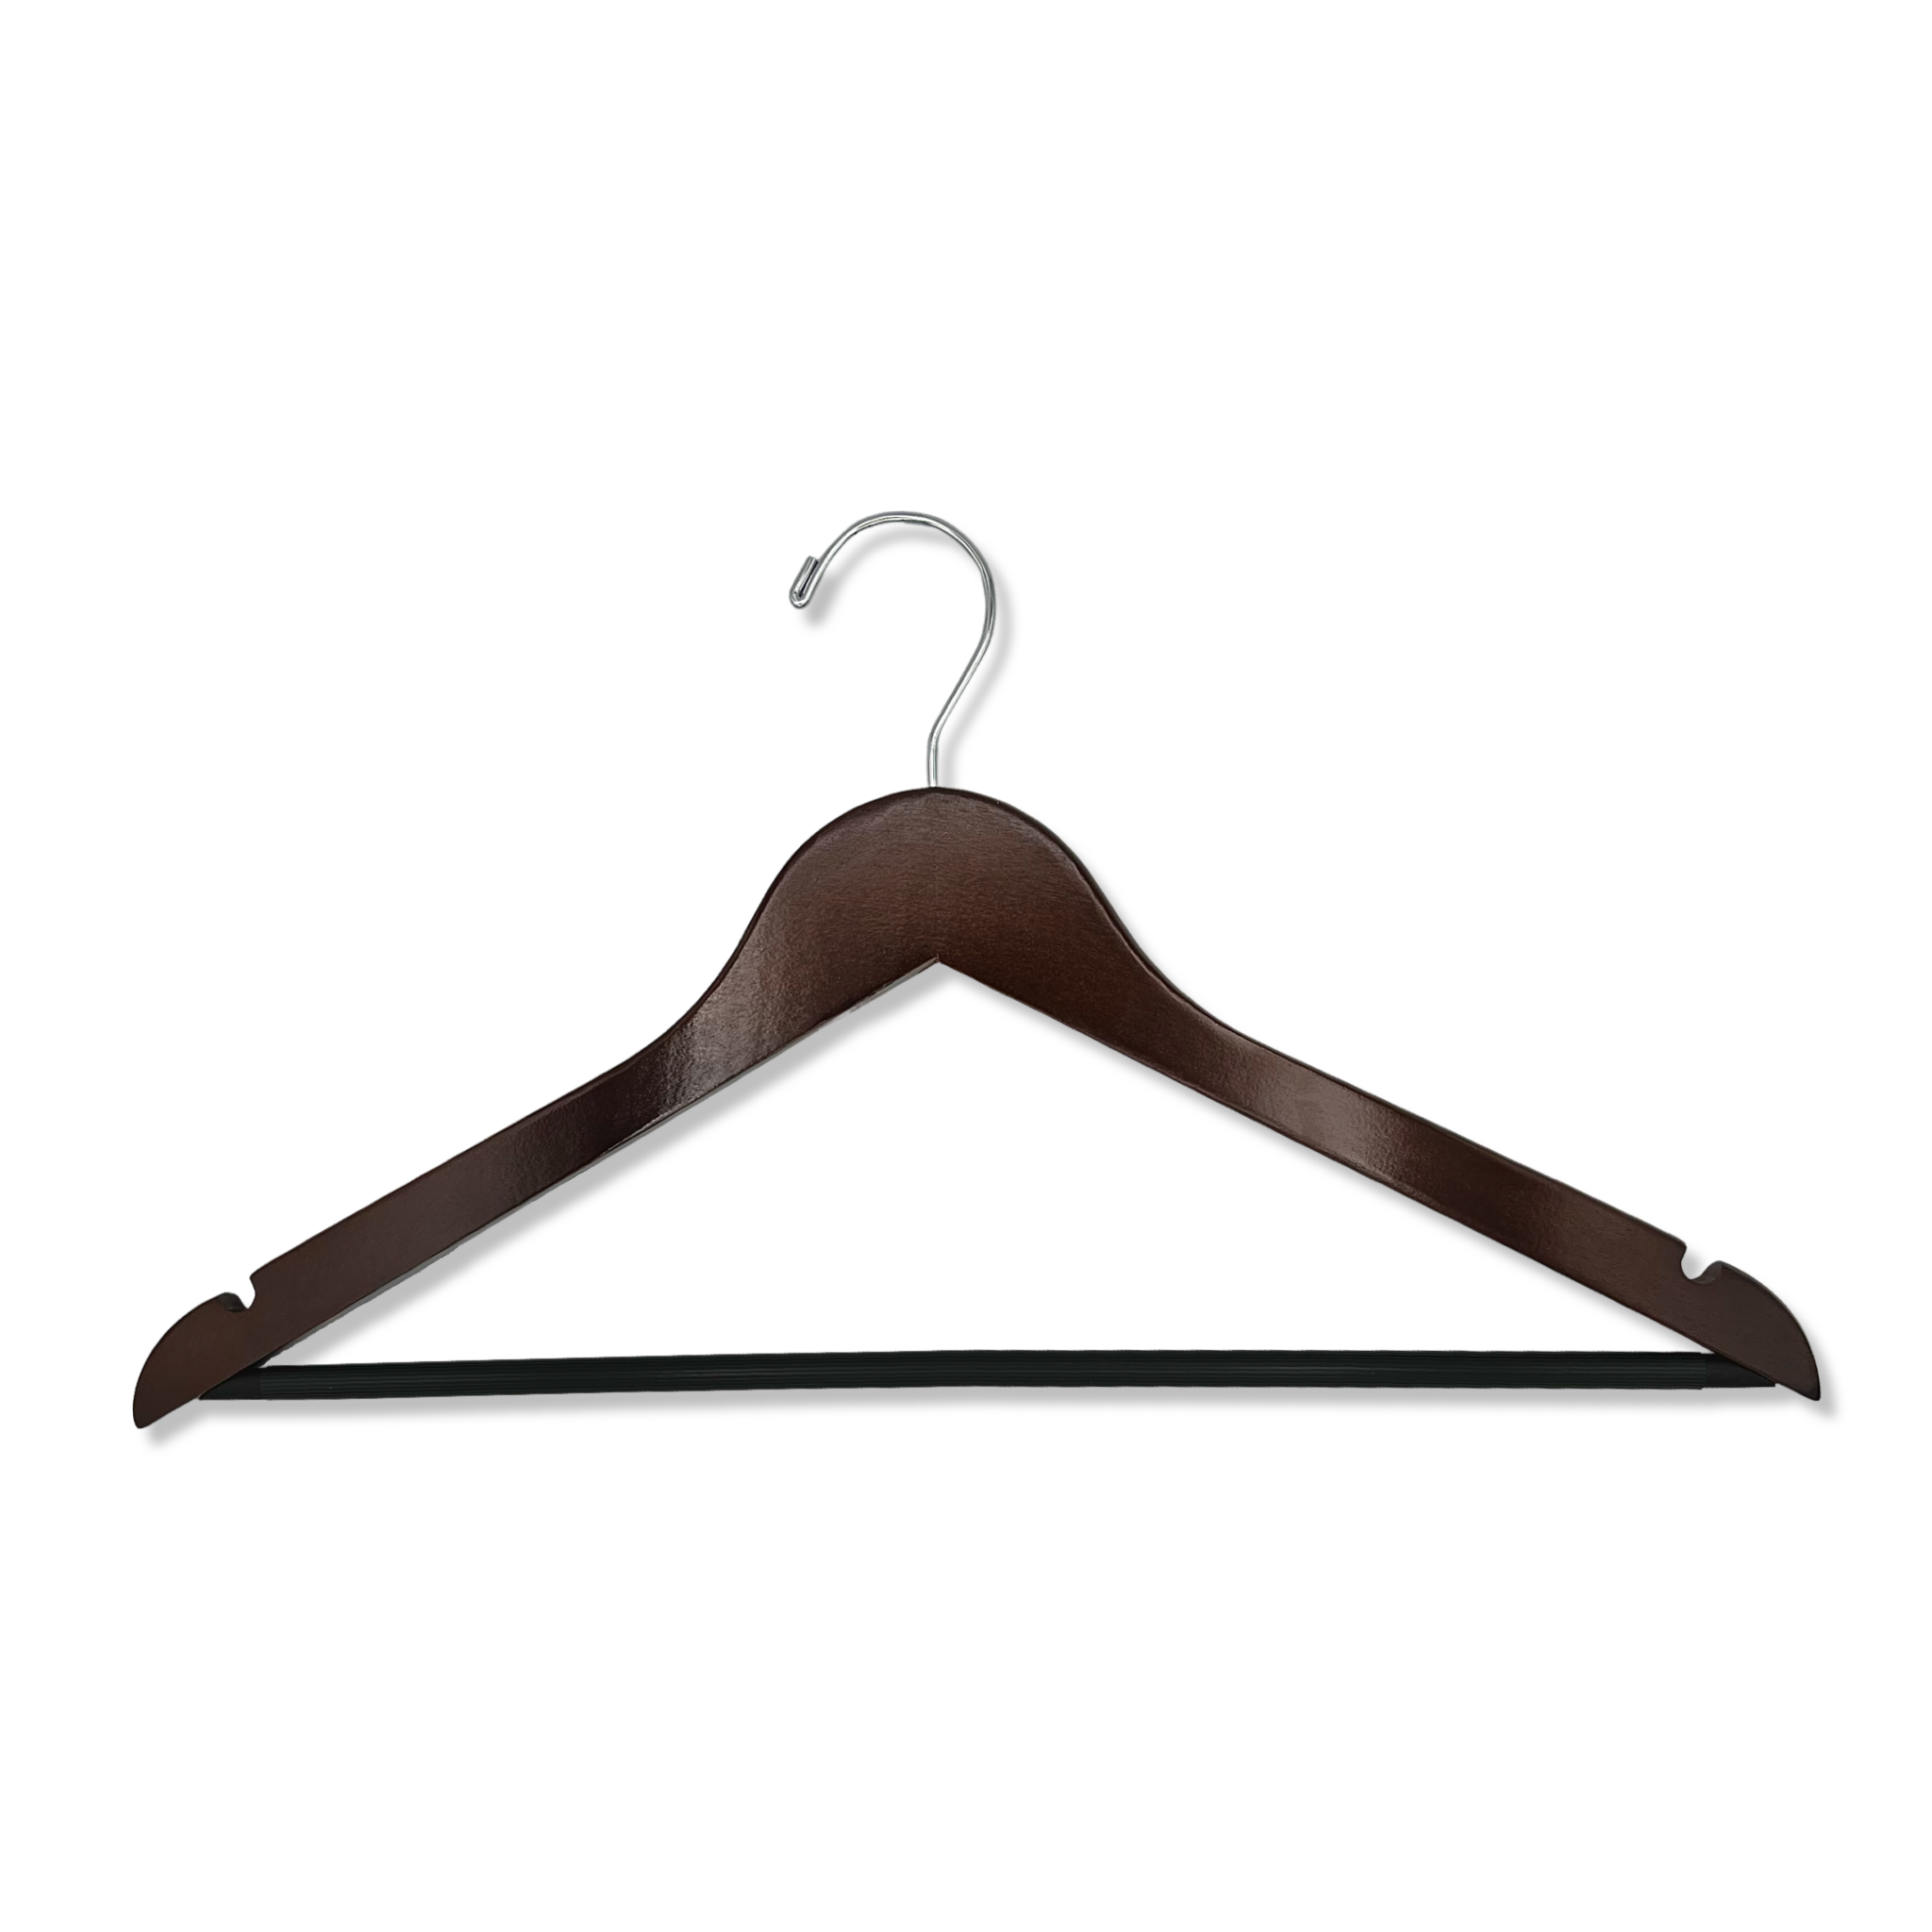 Dark Walnut Wooden Flat Suit Hanger with a silver hook, shoulder notches, and pant bar for custom bridal hanger designers